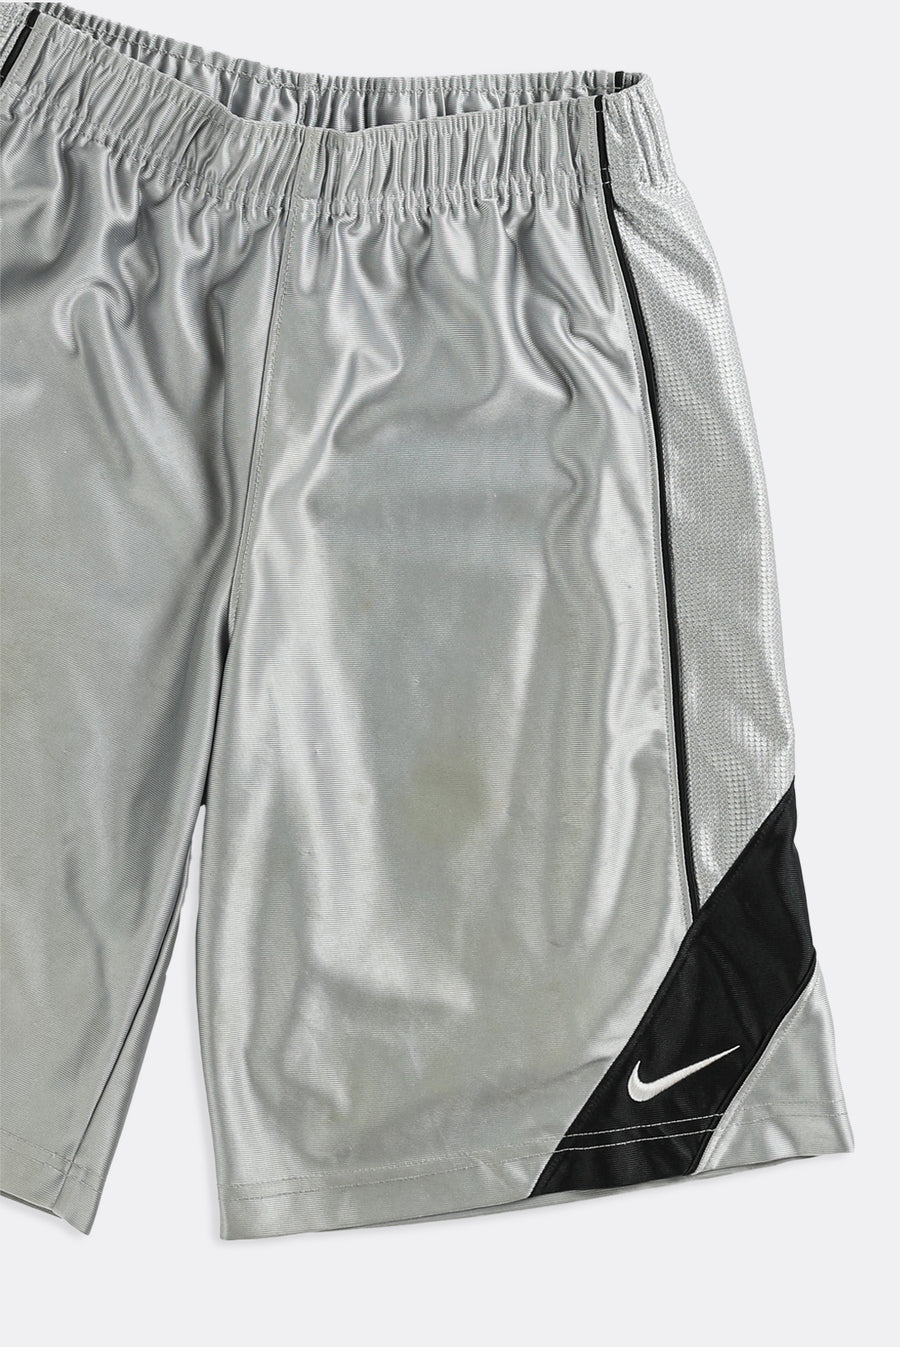 Vintage Nike Jersey Shorts - S